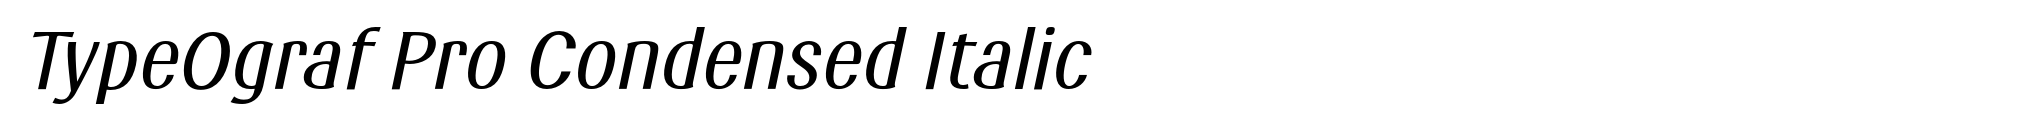 TypeOgraf Pro Condensed Italic image